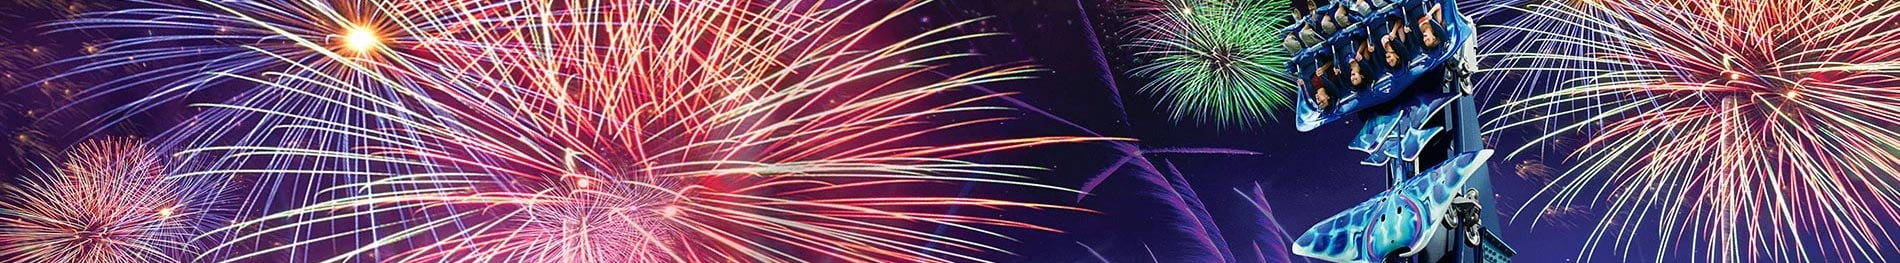 SeaWorld Orlando Manta with Fireworks